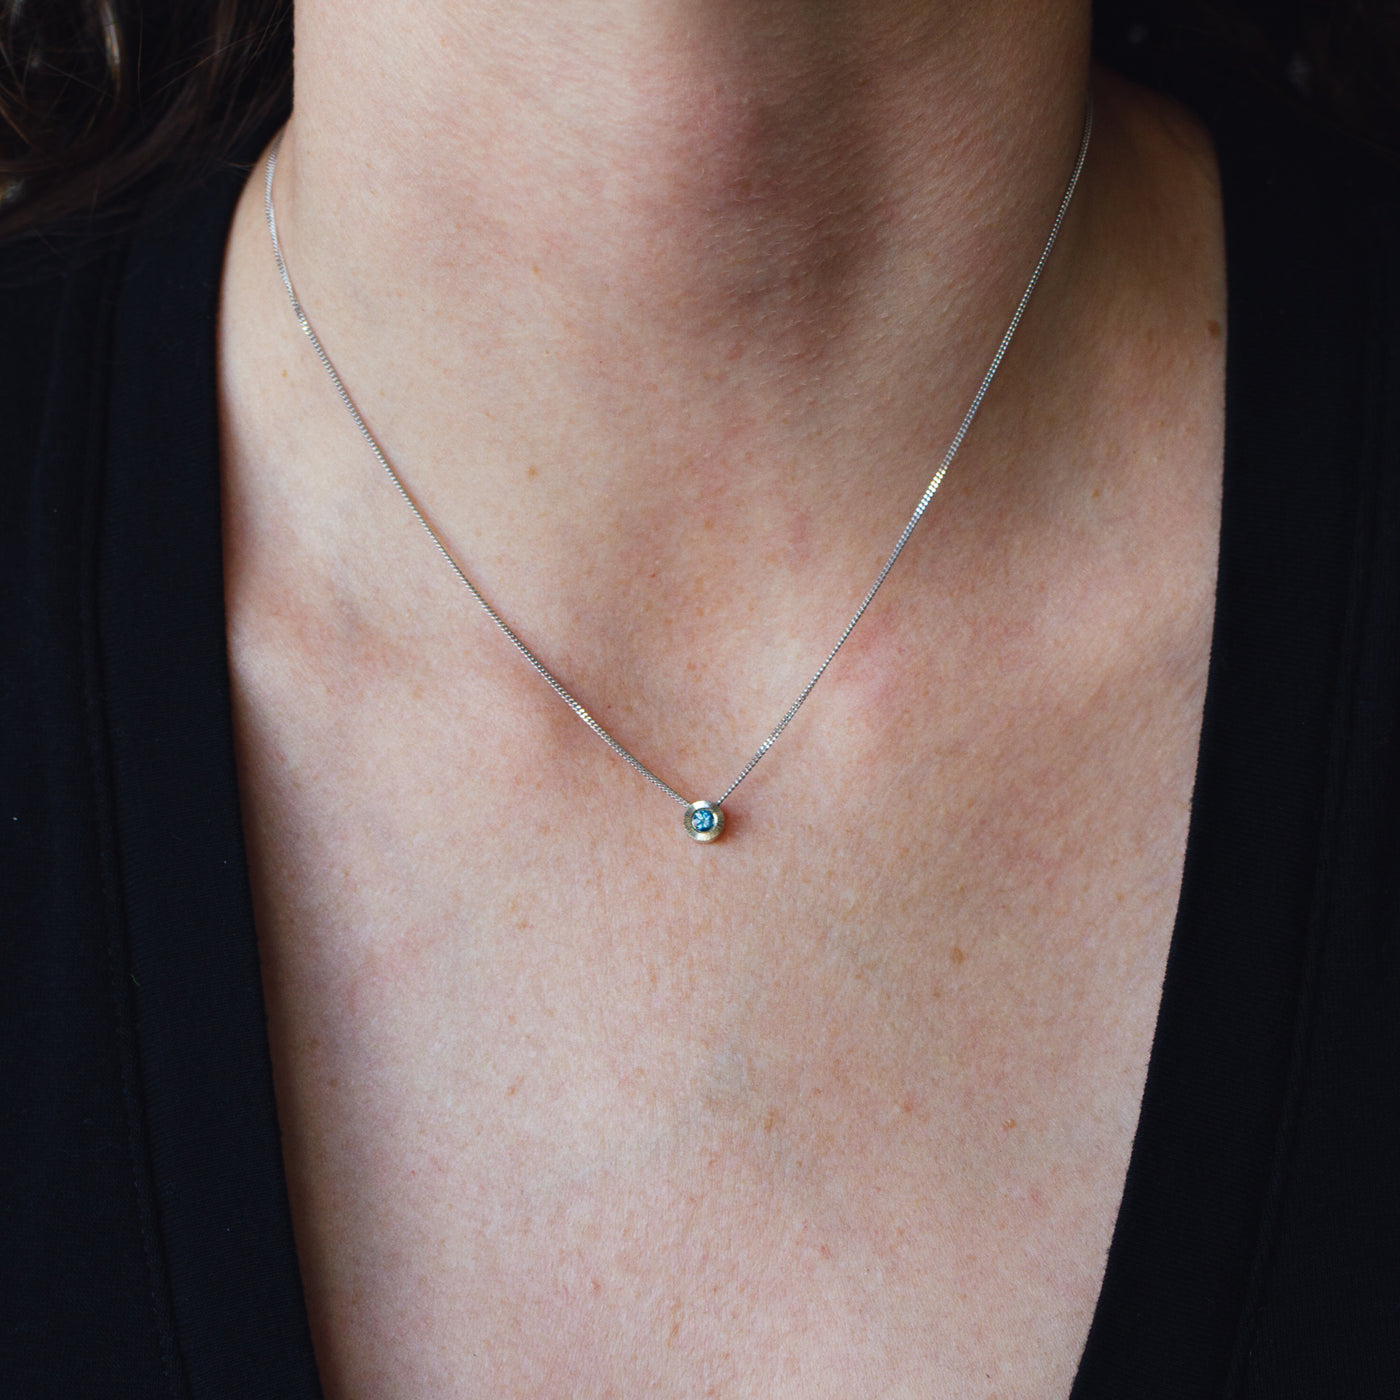 14k white gold small aurora necklace with a blue montana sapphire center around a neck